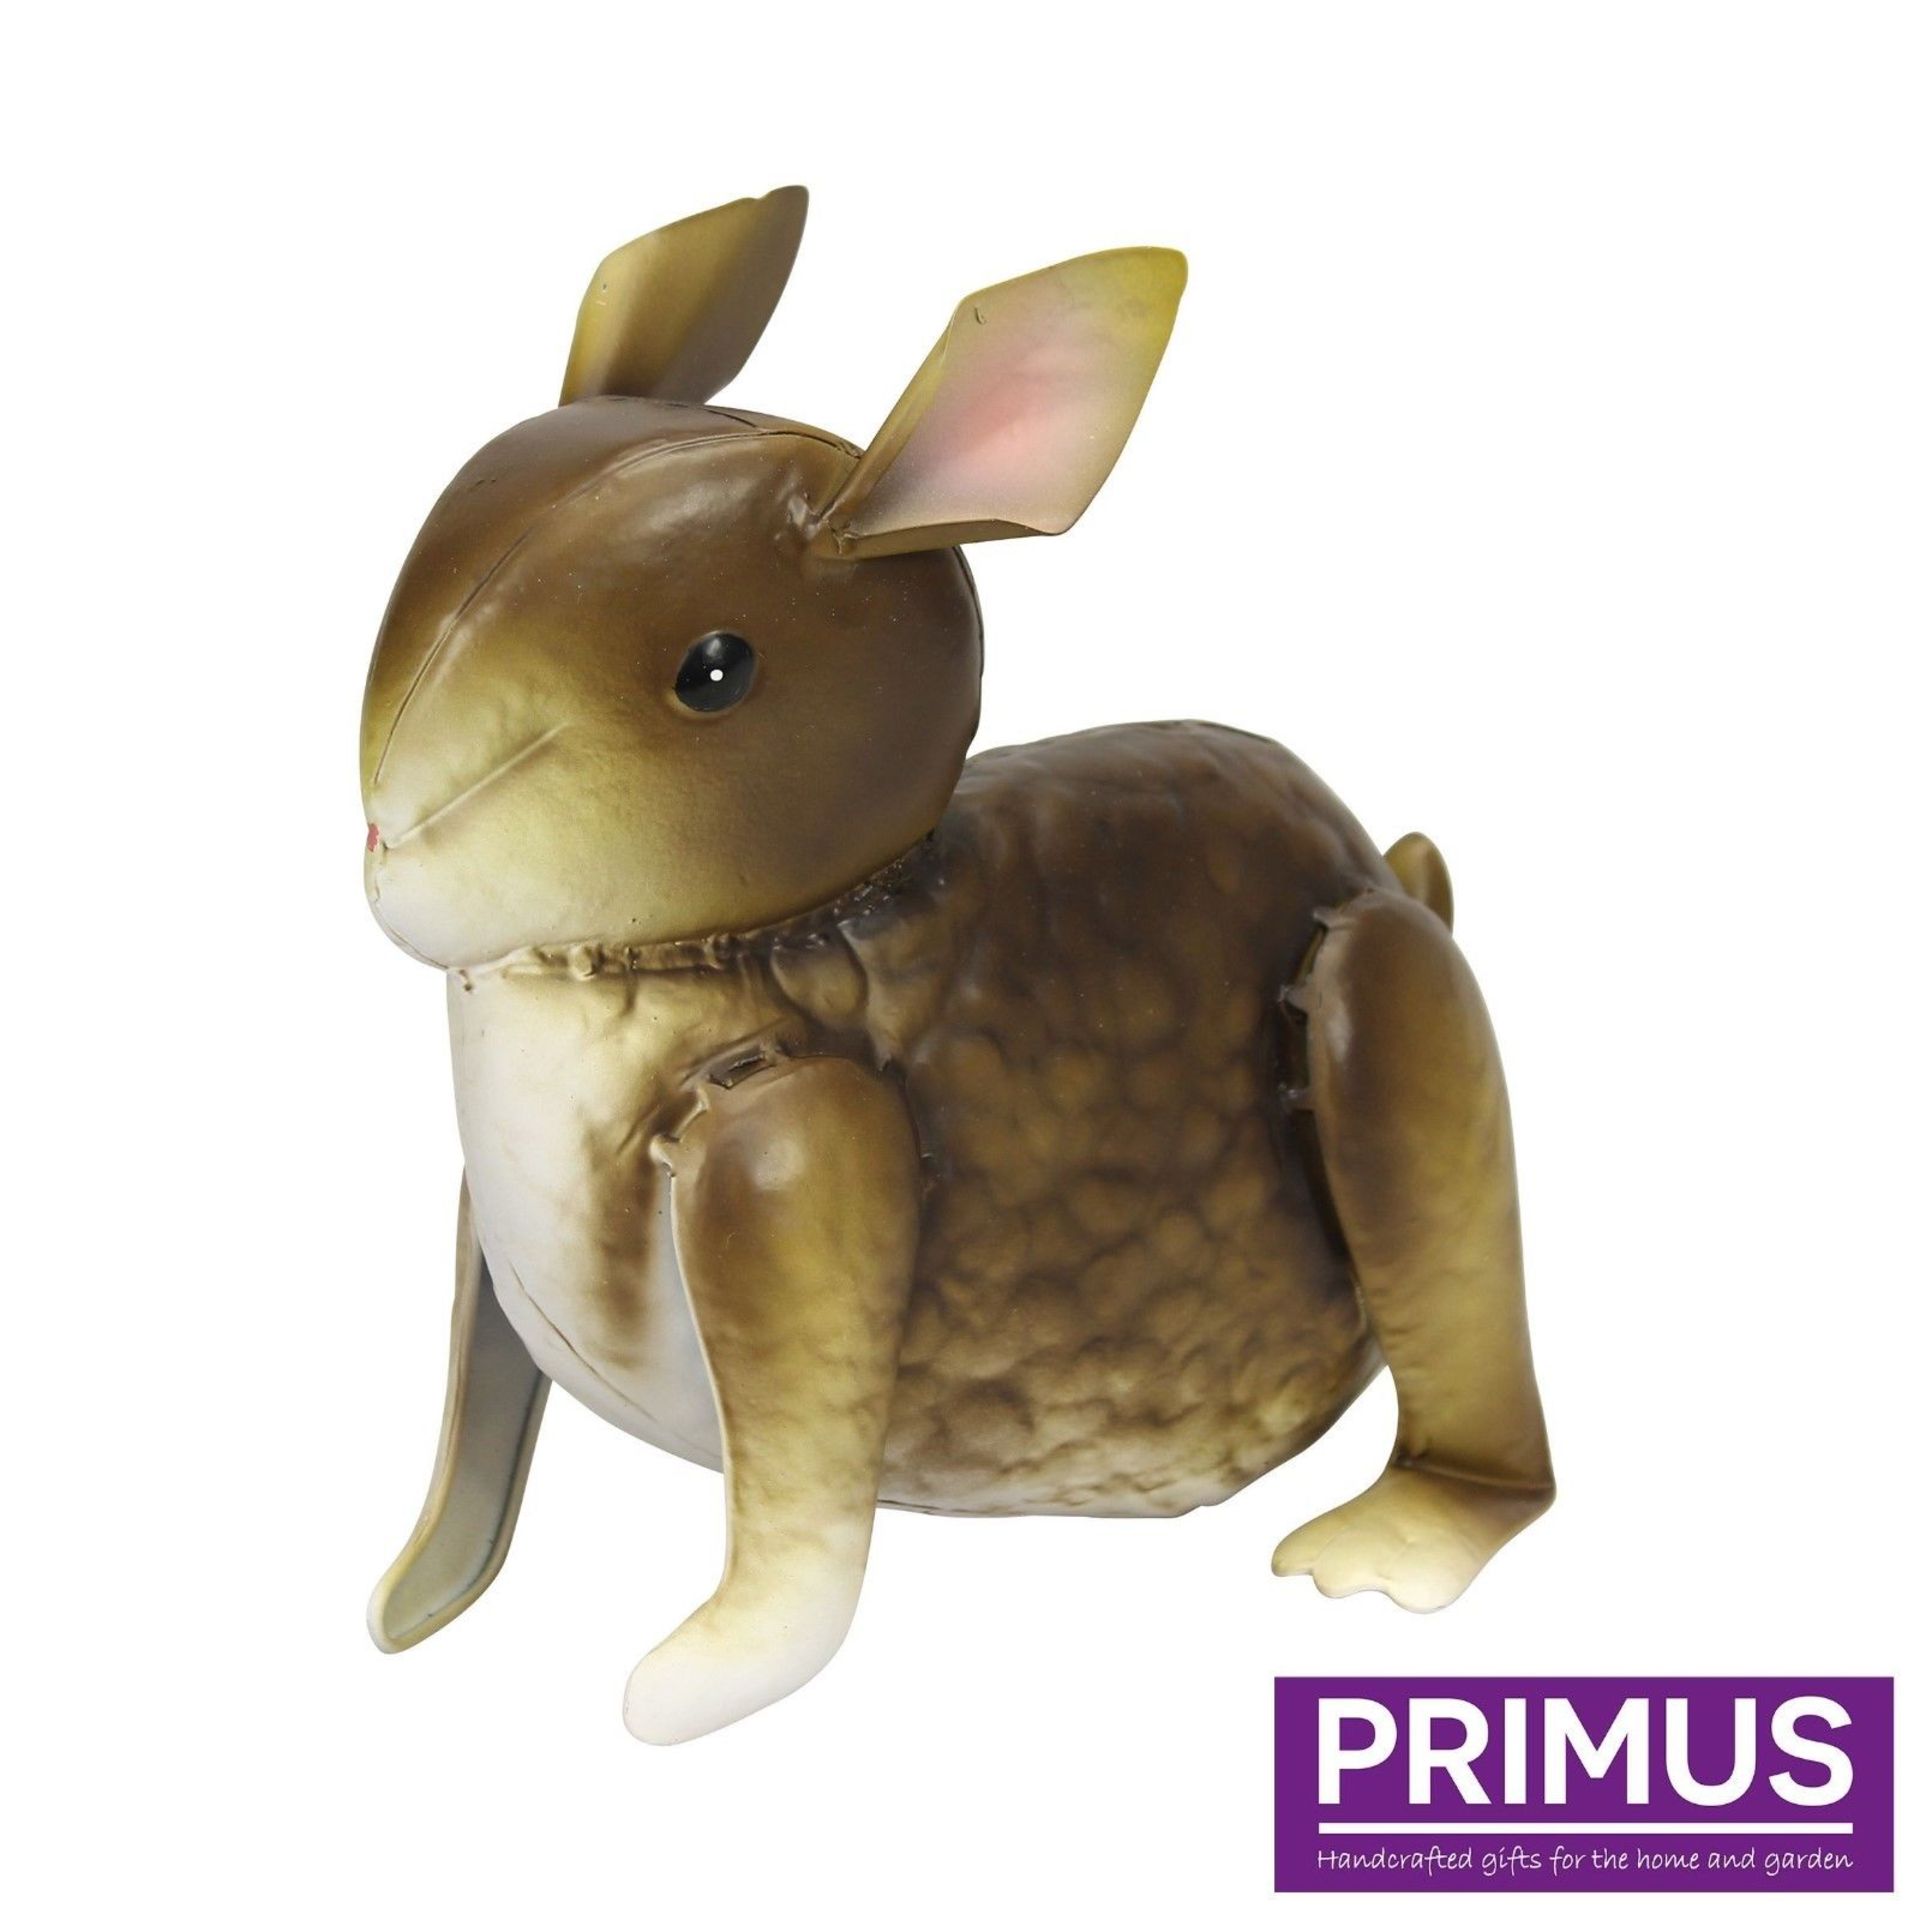 Primus Metal Rabbit Garden Ornament - Brown / Grey Colours - 10 Units Per Lot - Image 2 of 5